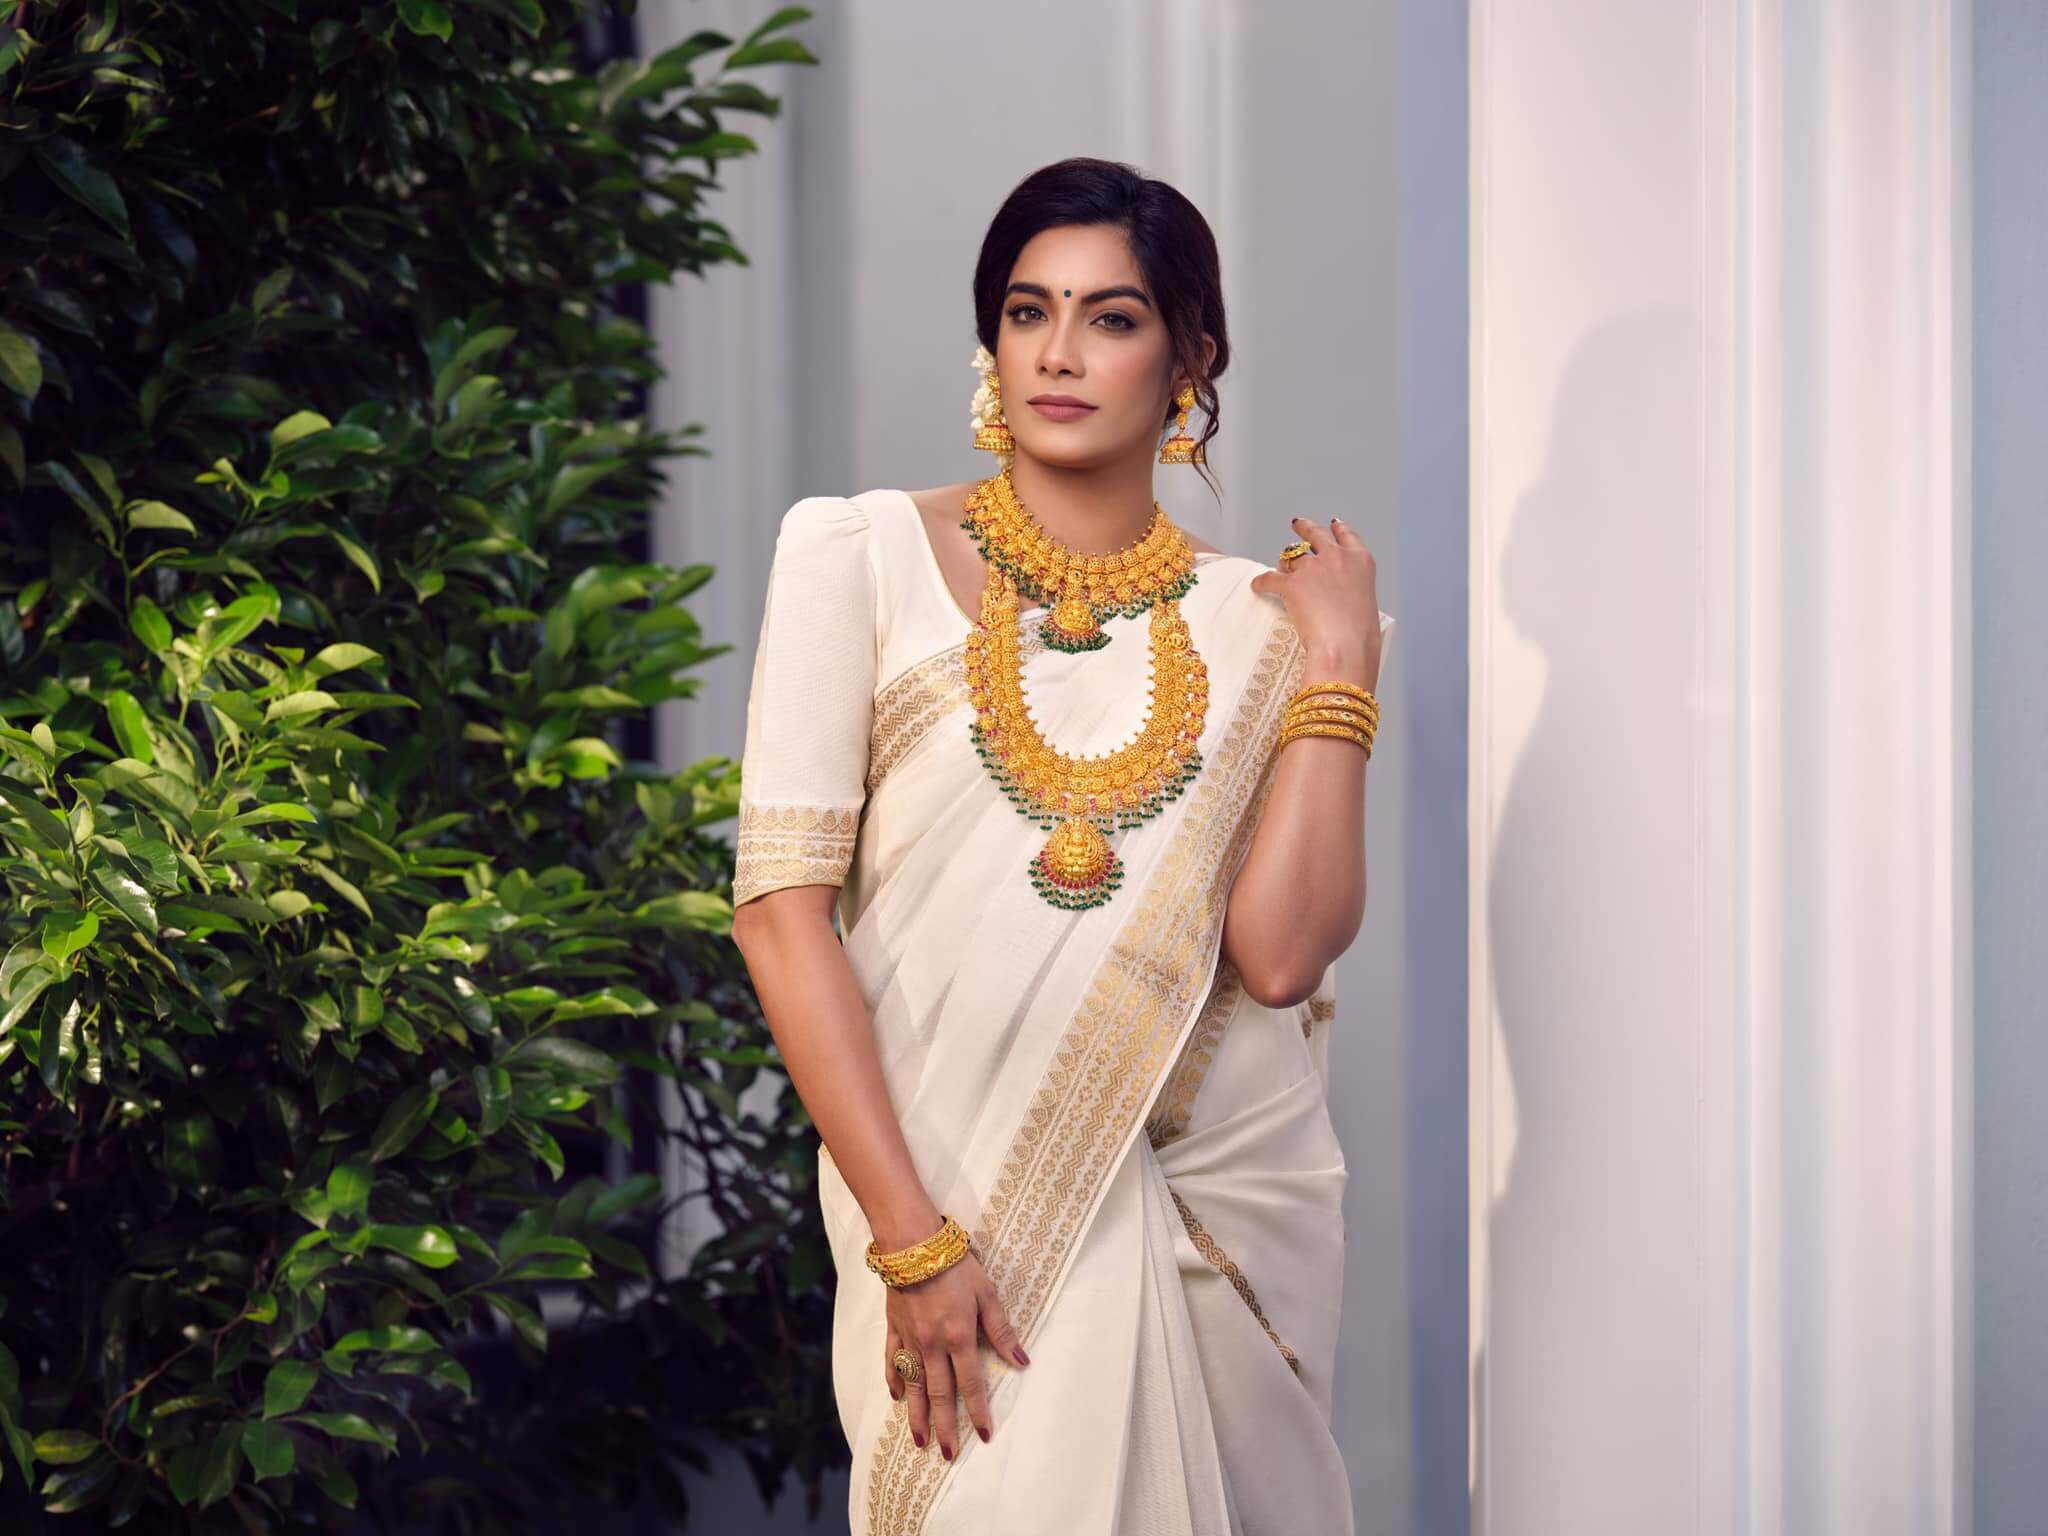 Dilsha Prasannan in white saree